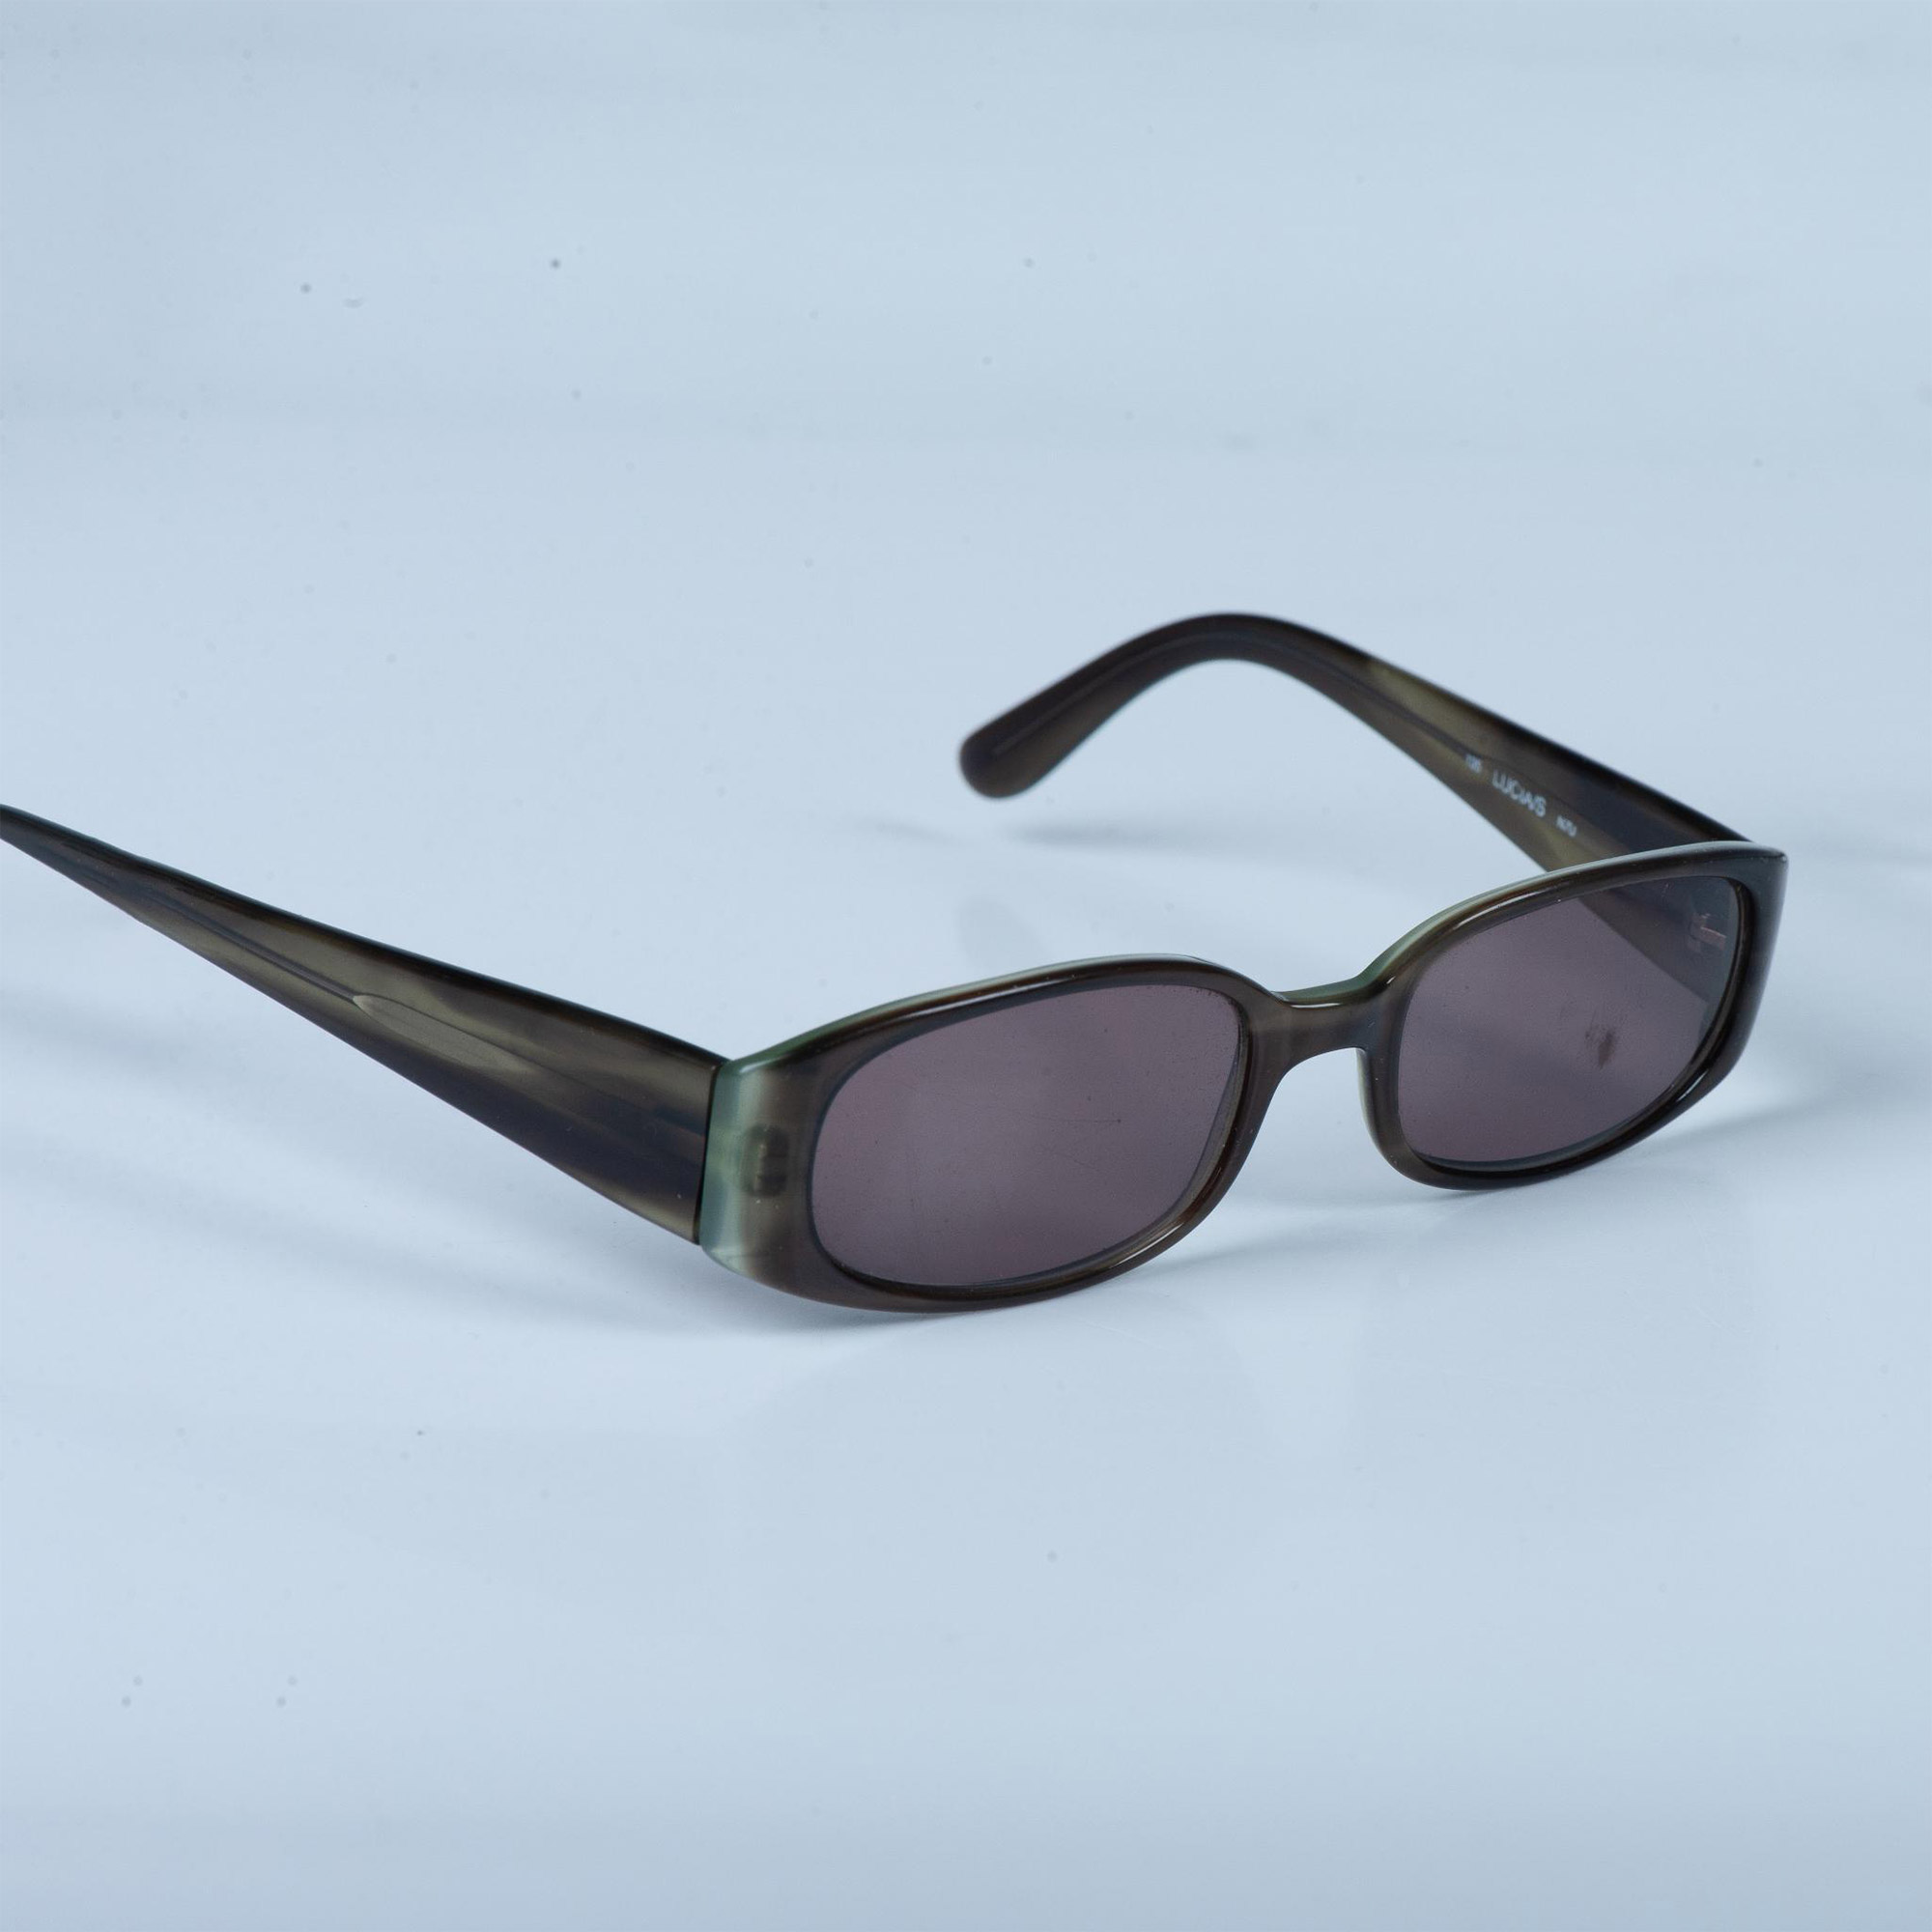 2pc Designer Eyeglass Frames - Image 7 of 11